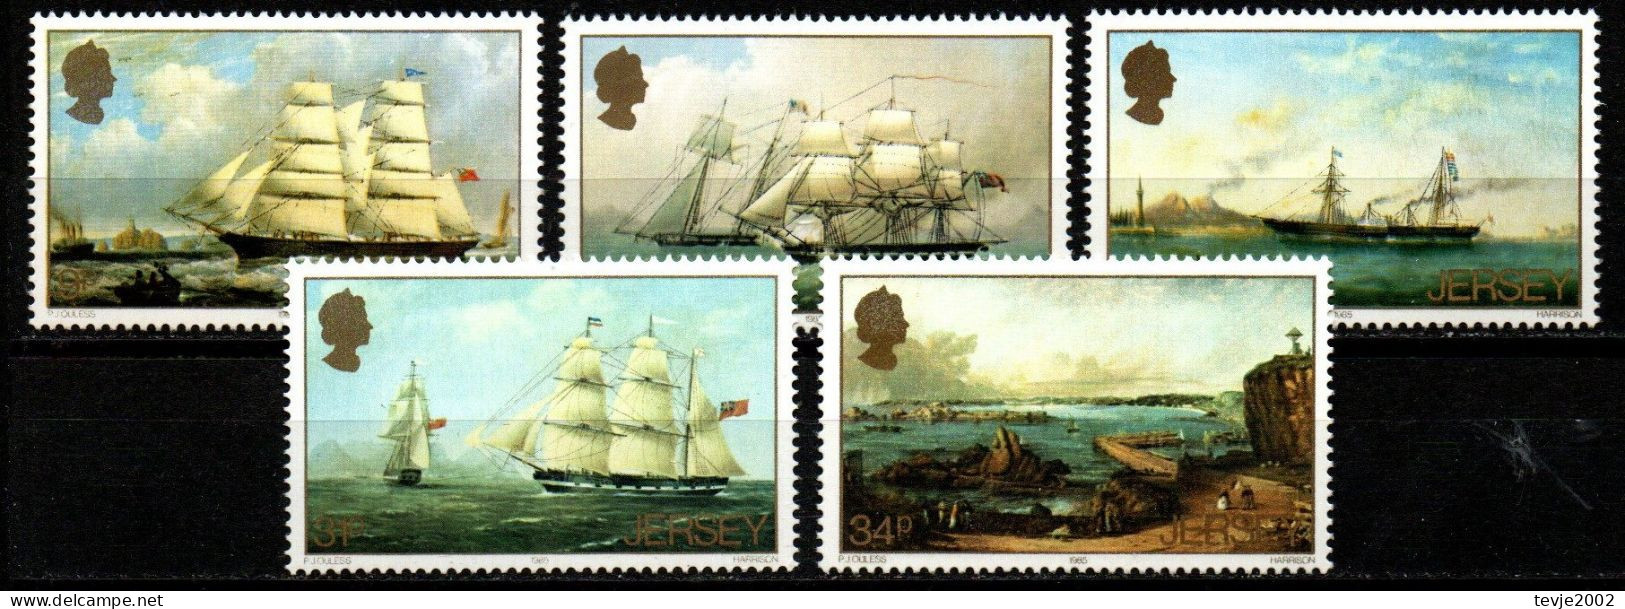 Jersey 1985 - Mi.Nr. 342 - 346 - Postfrisch MNH - Segelschiffe Sailing Ships - Schiffe